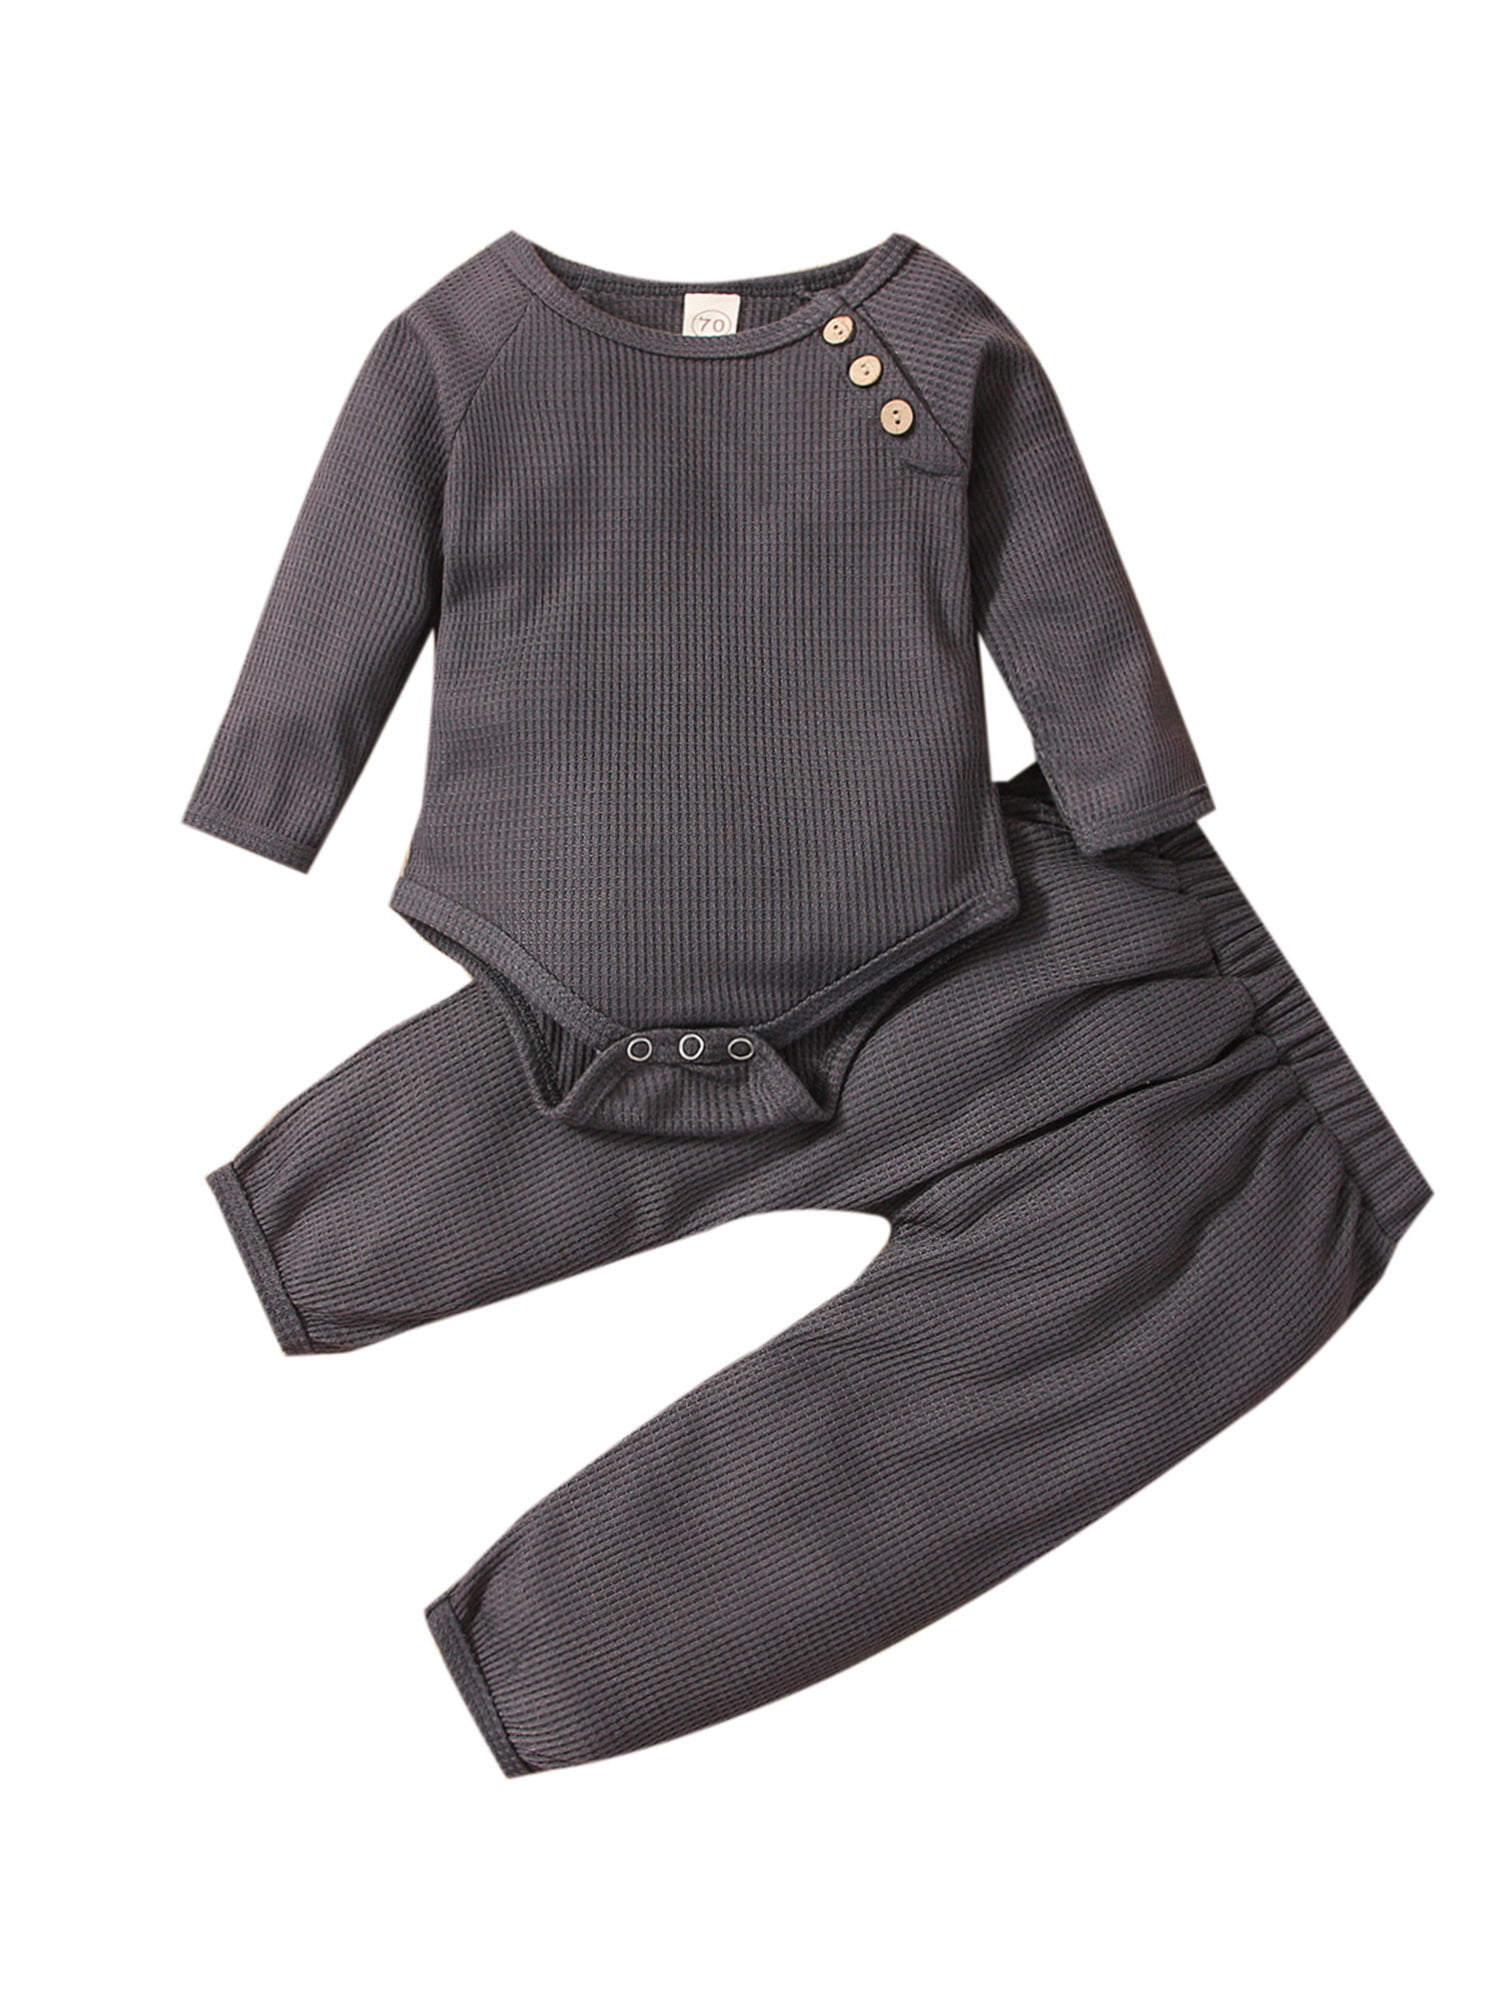 LUOTIAN-0 Newborn Unisex Baby Clothes Outfits Long Sleeve Ribbed Sleepwear 2PCS Pajamas Set